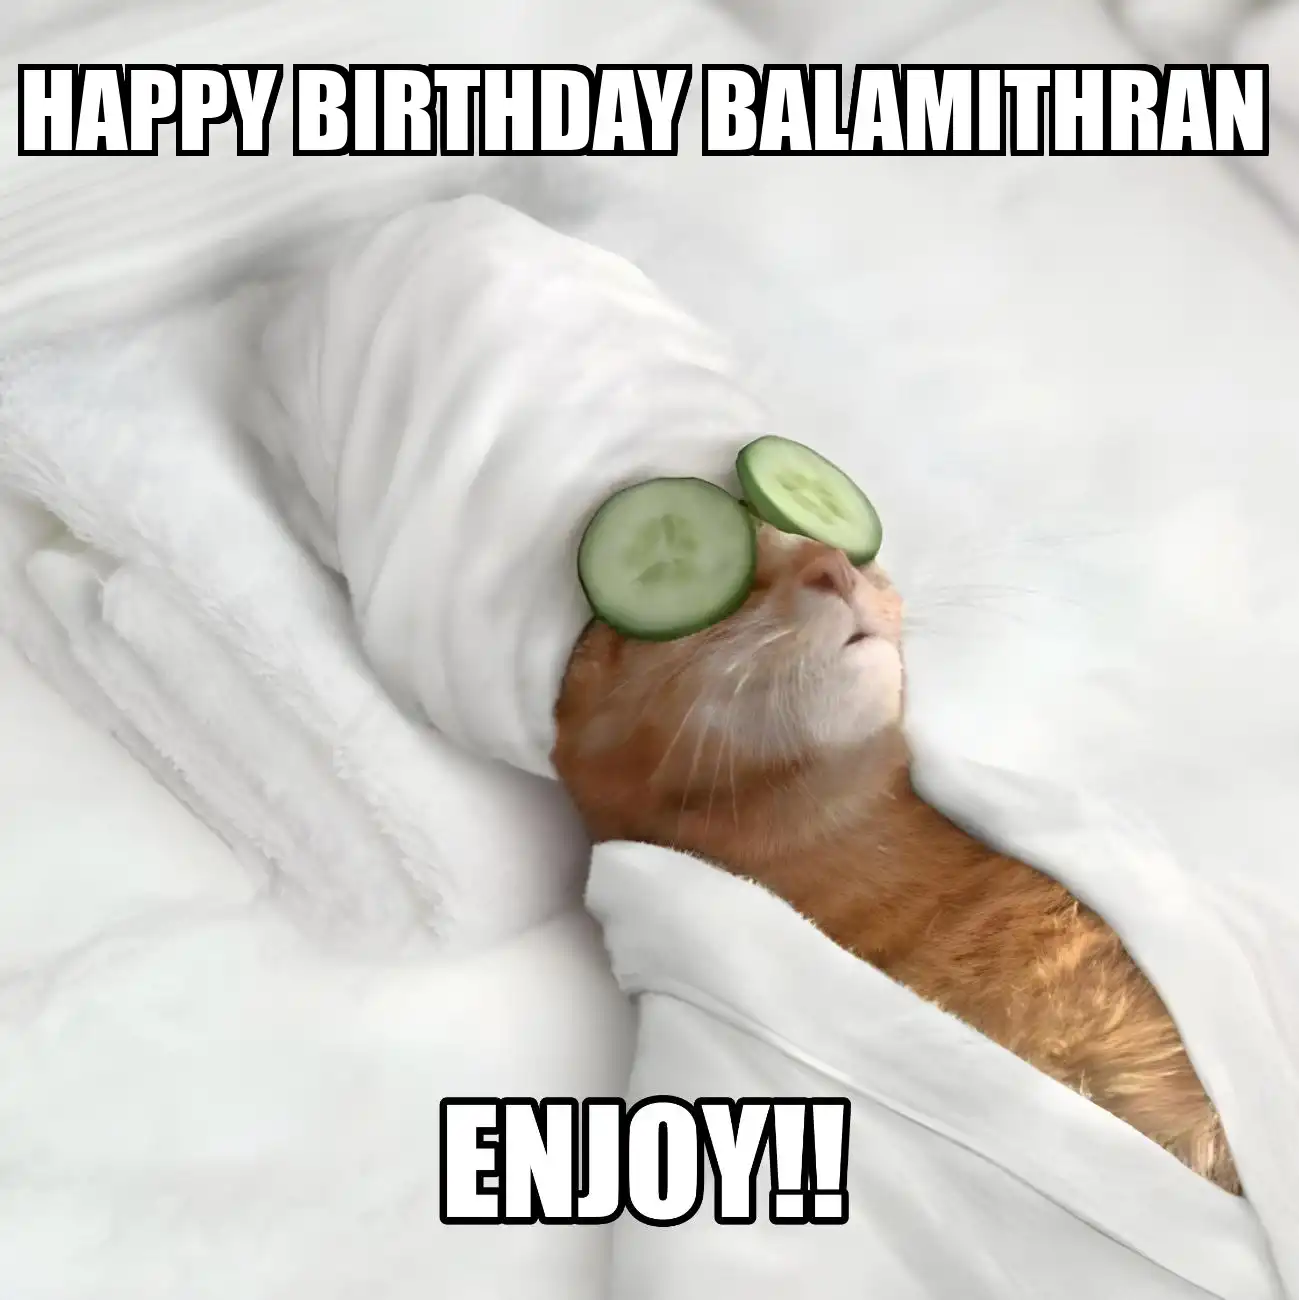 Happy Birthday Balamithran Enjoy Cat Meme